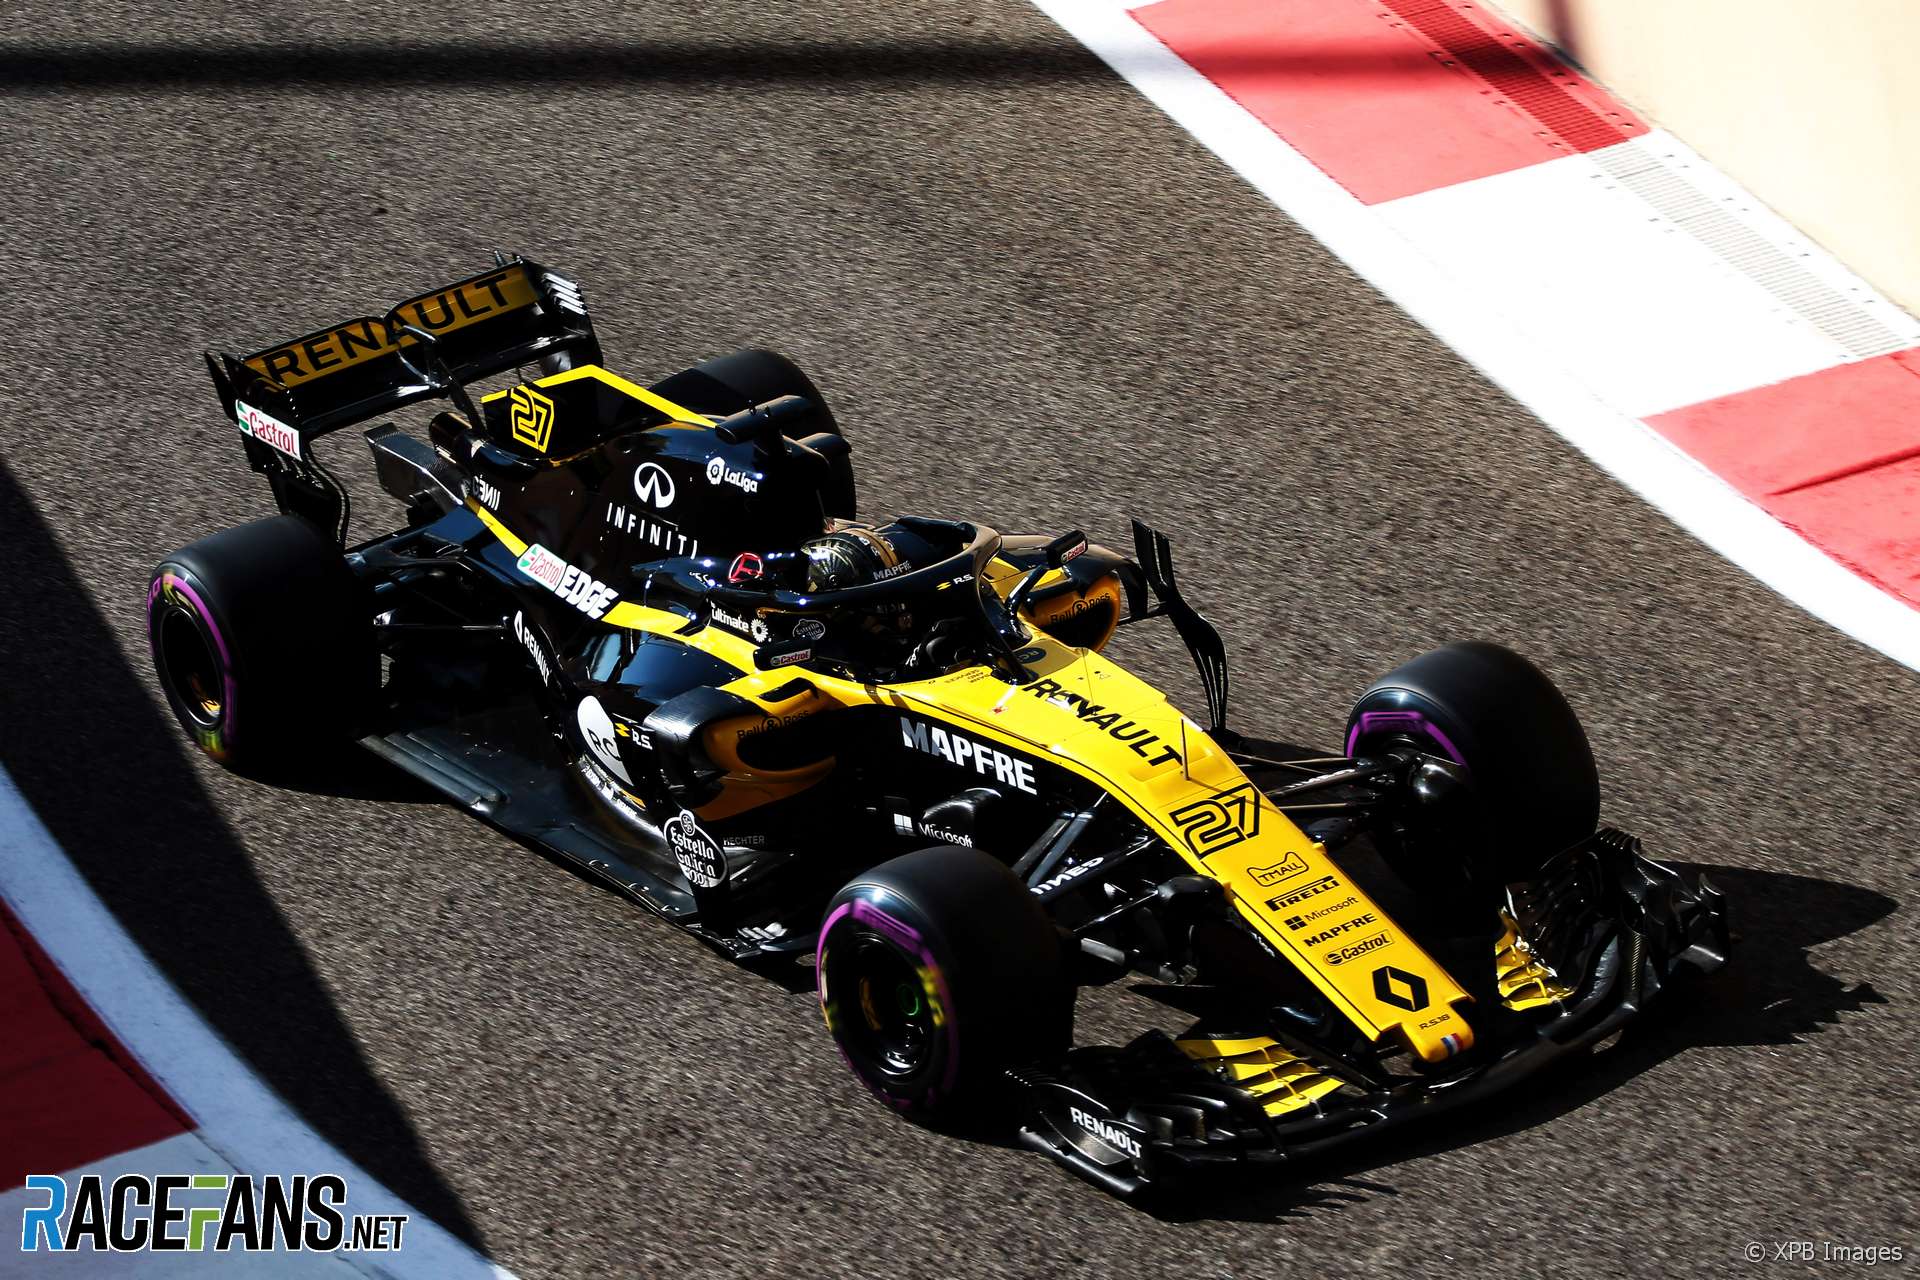 Nico Hulkenberg, Renault, Yas Marina, 2018